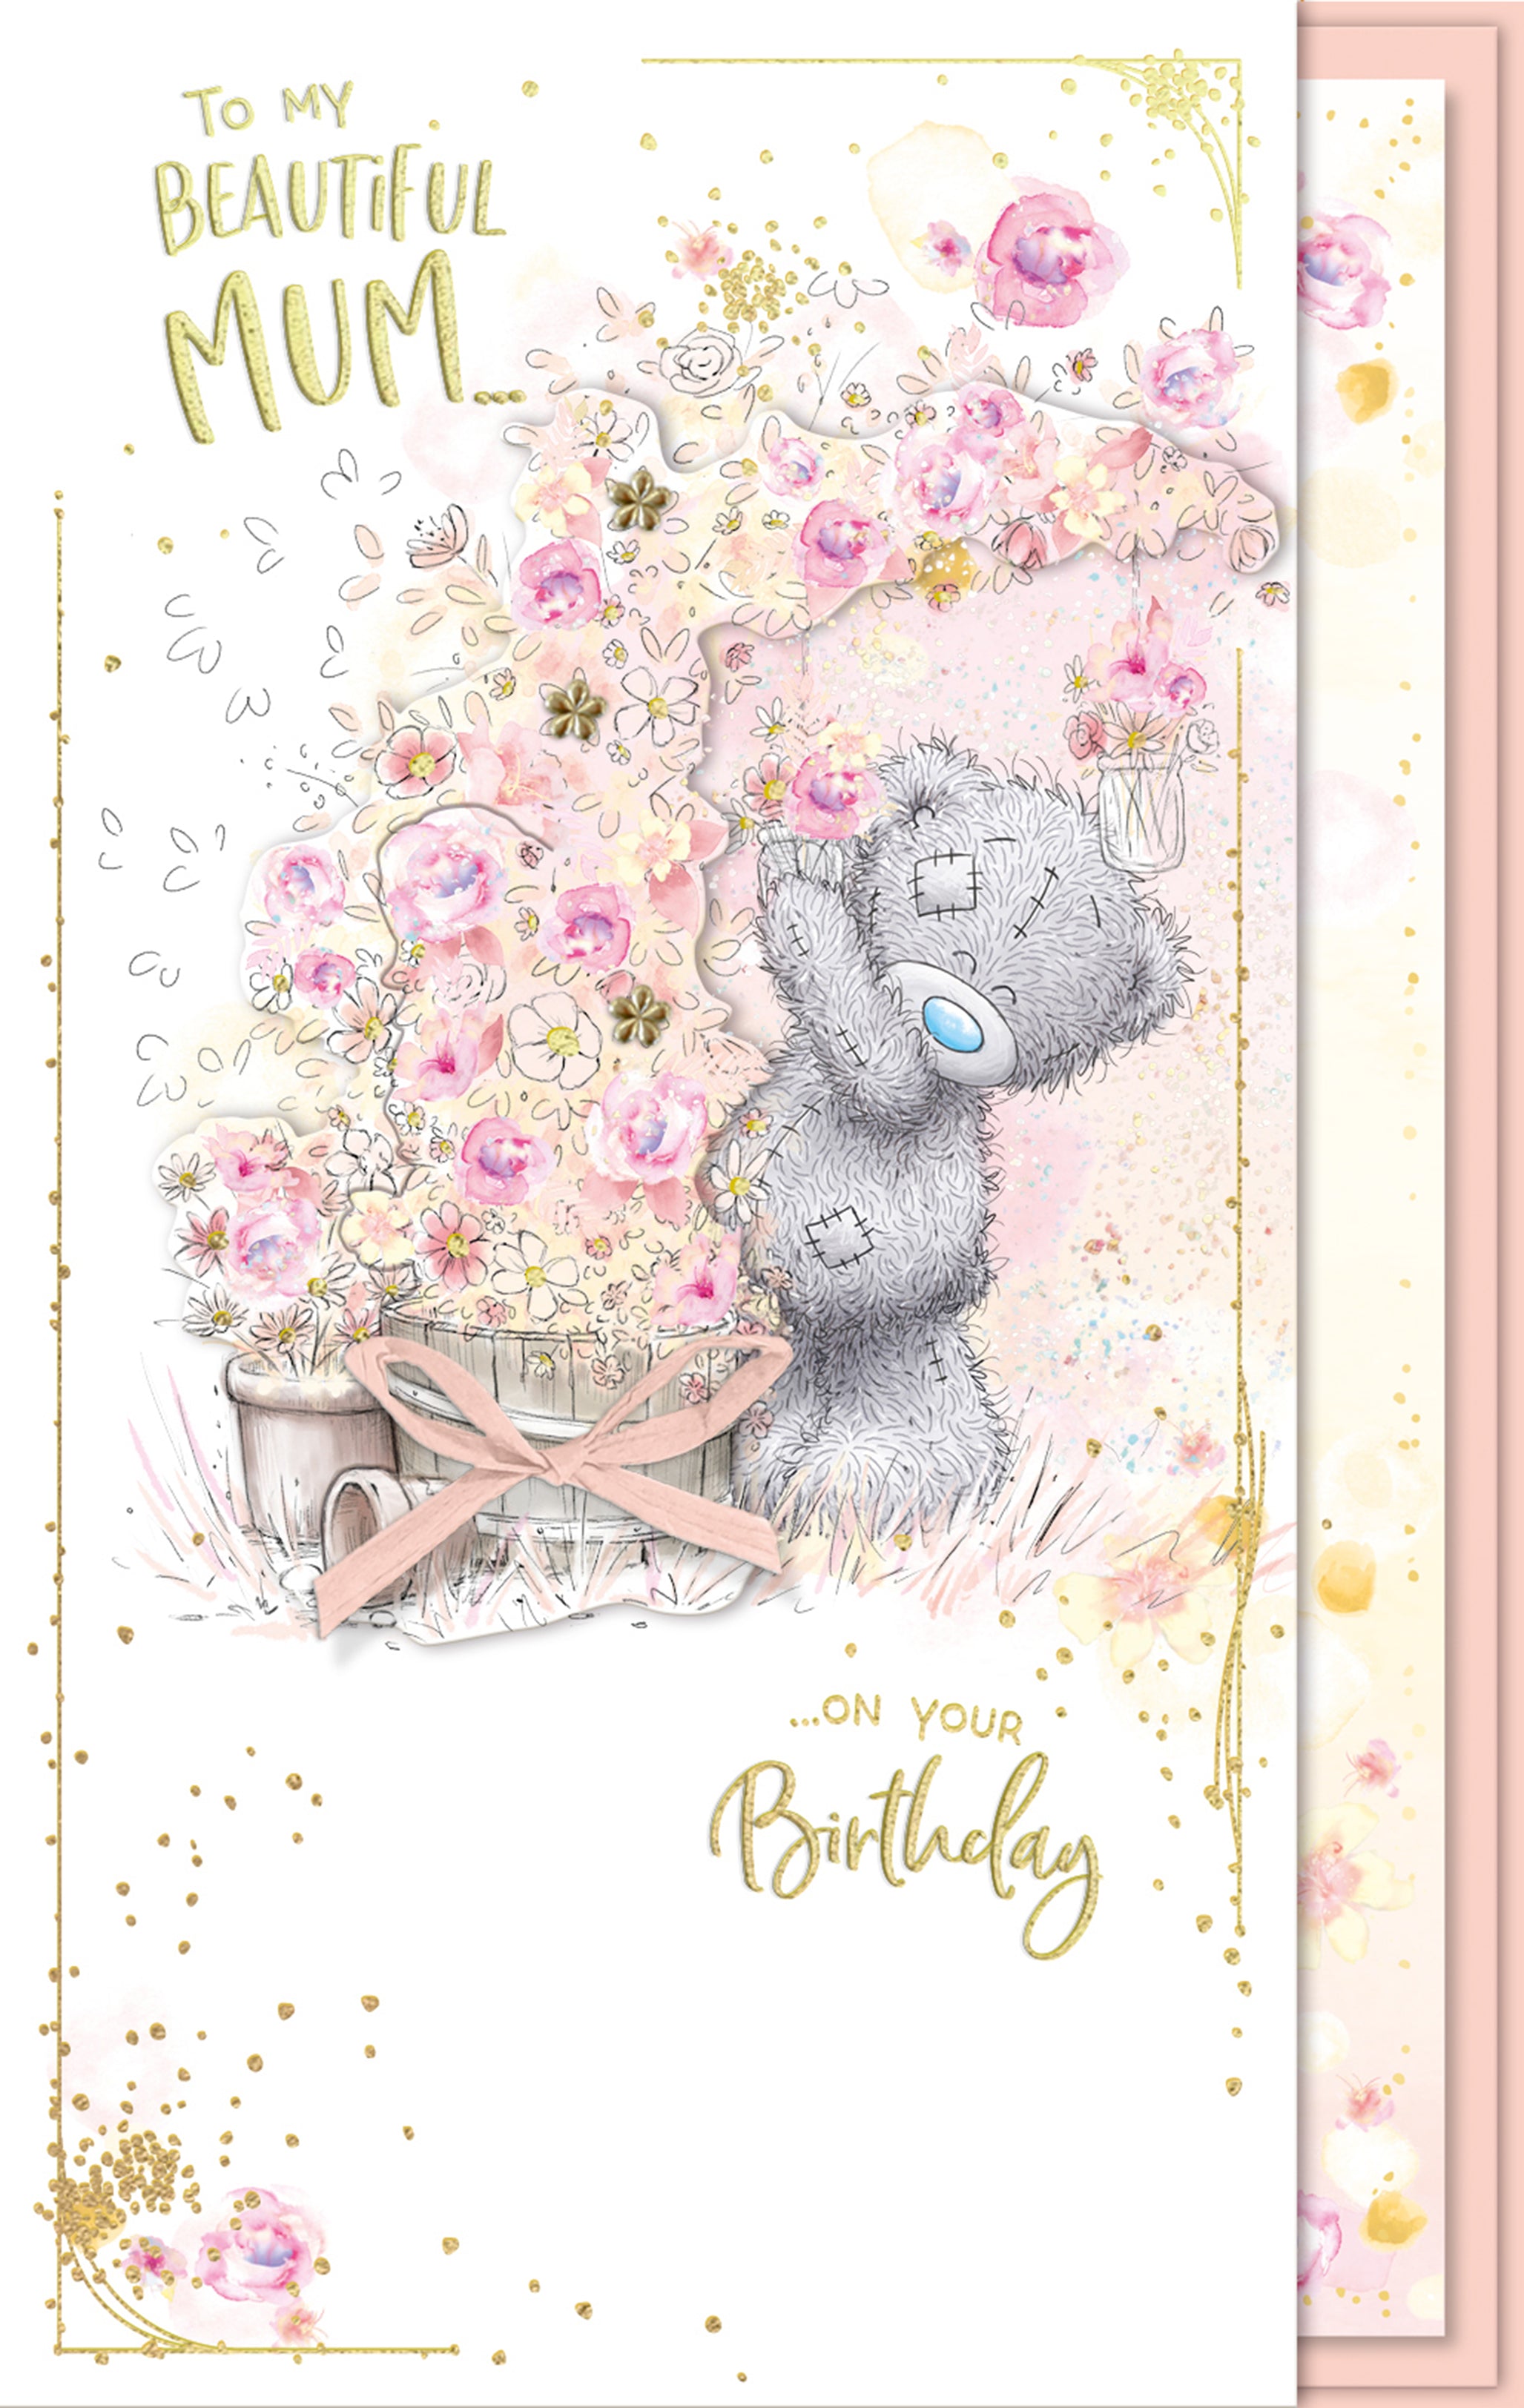 Mum Birthday Card - Bear Picking Flowers